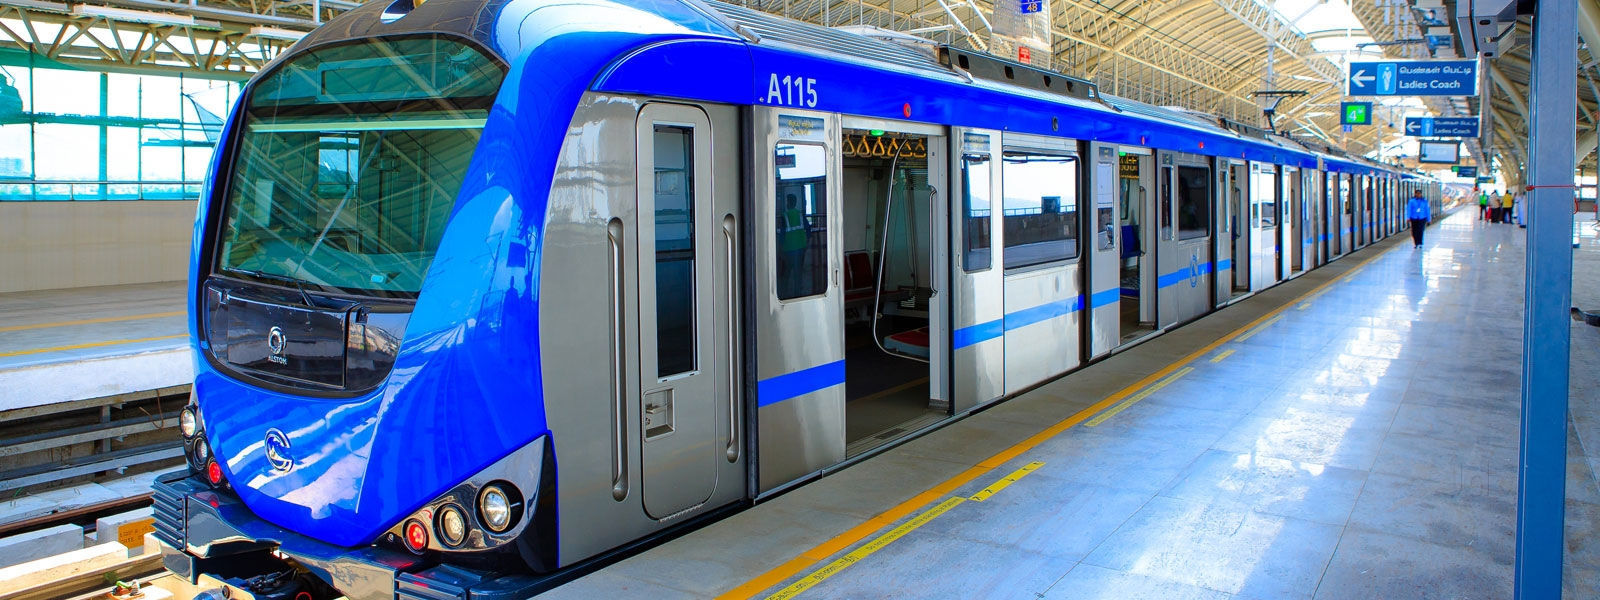 SCT announces light train for Nuevo León